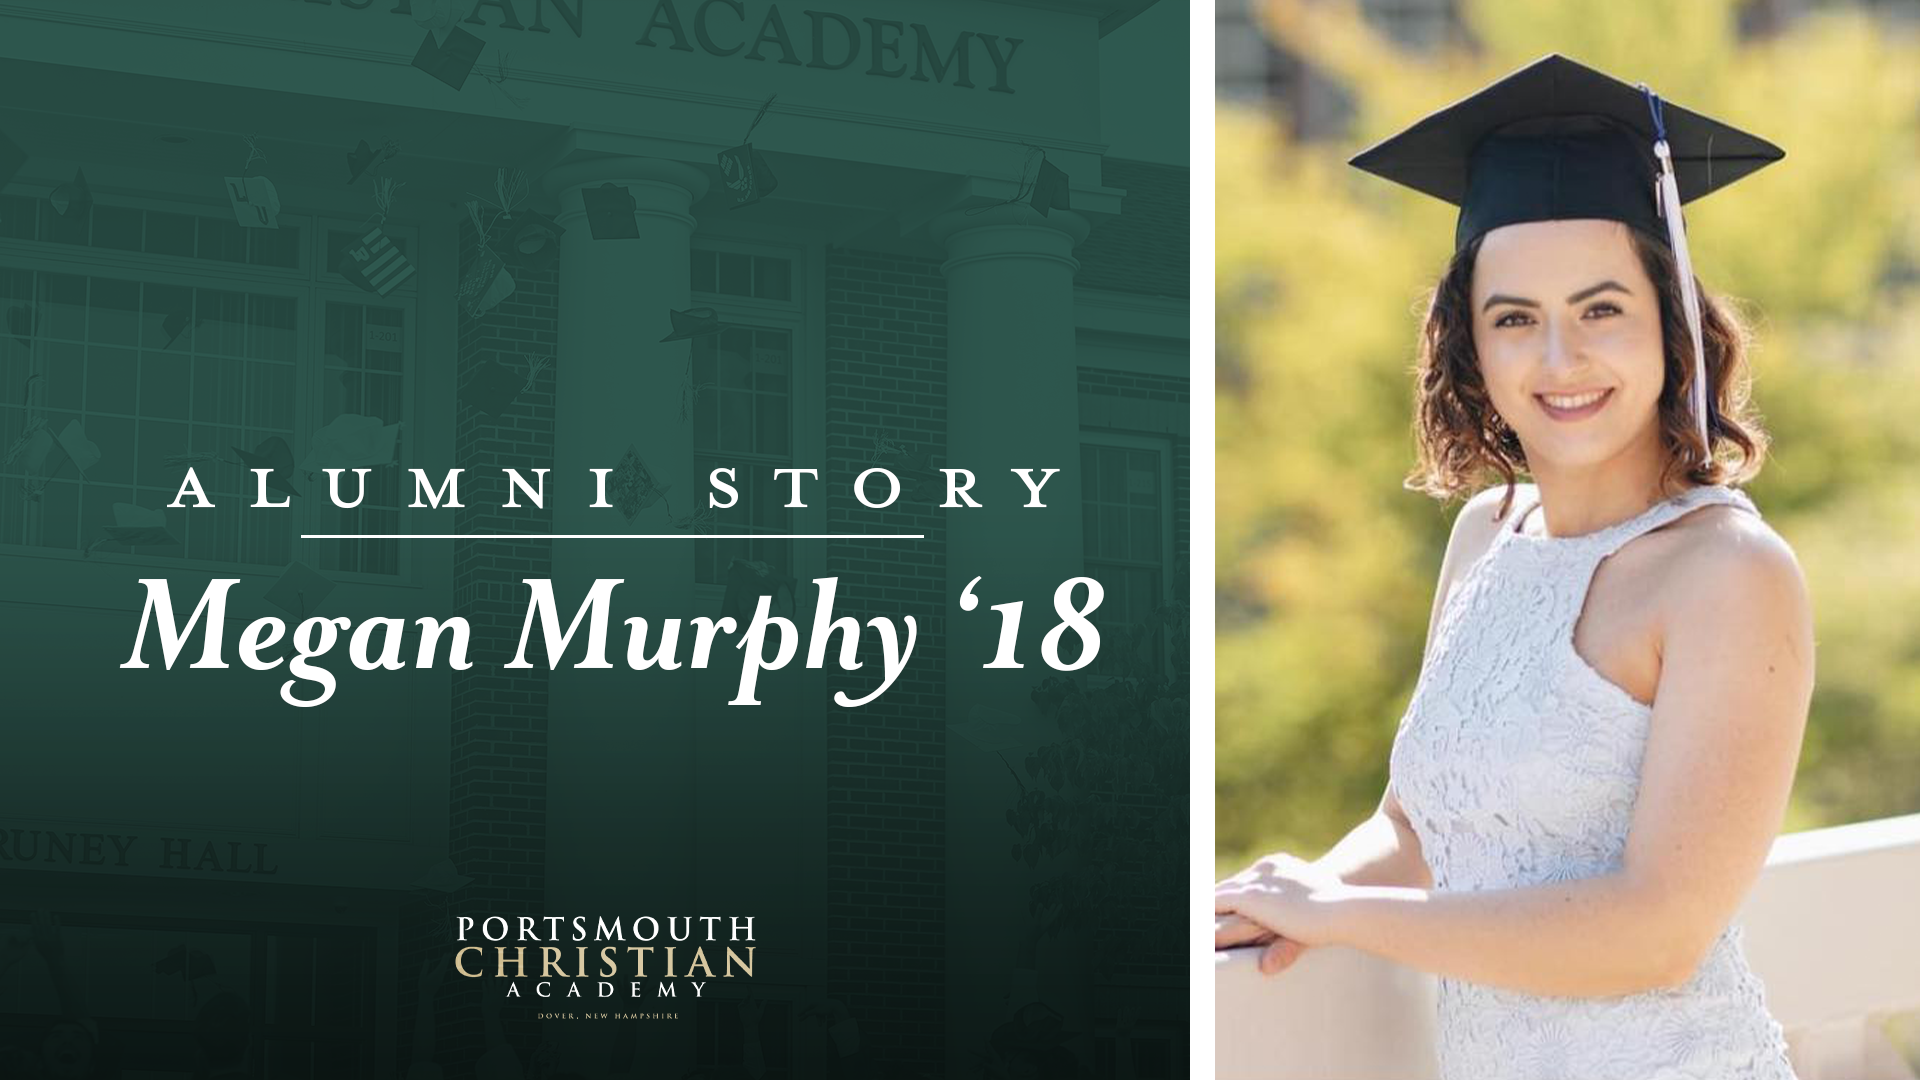 Megan Murphy wearing her graduation cap